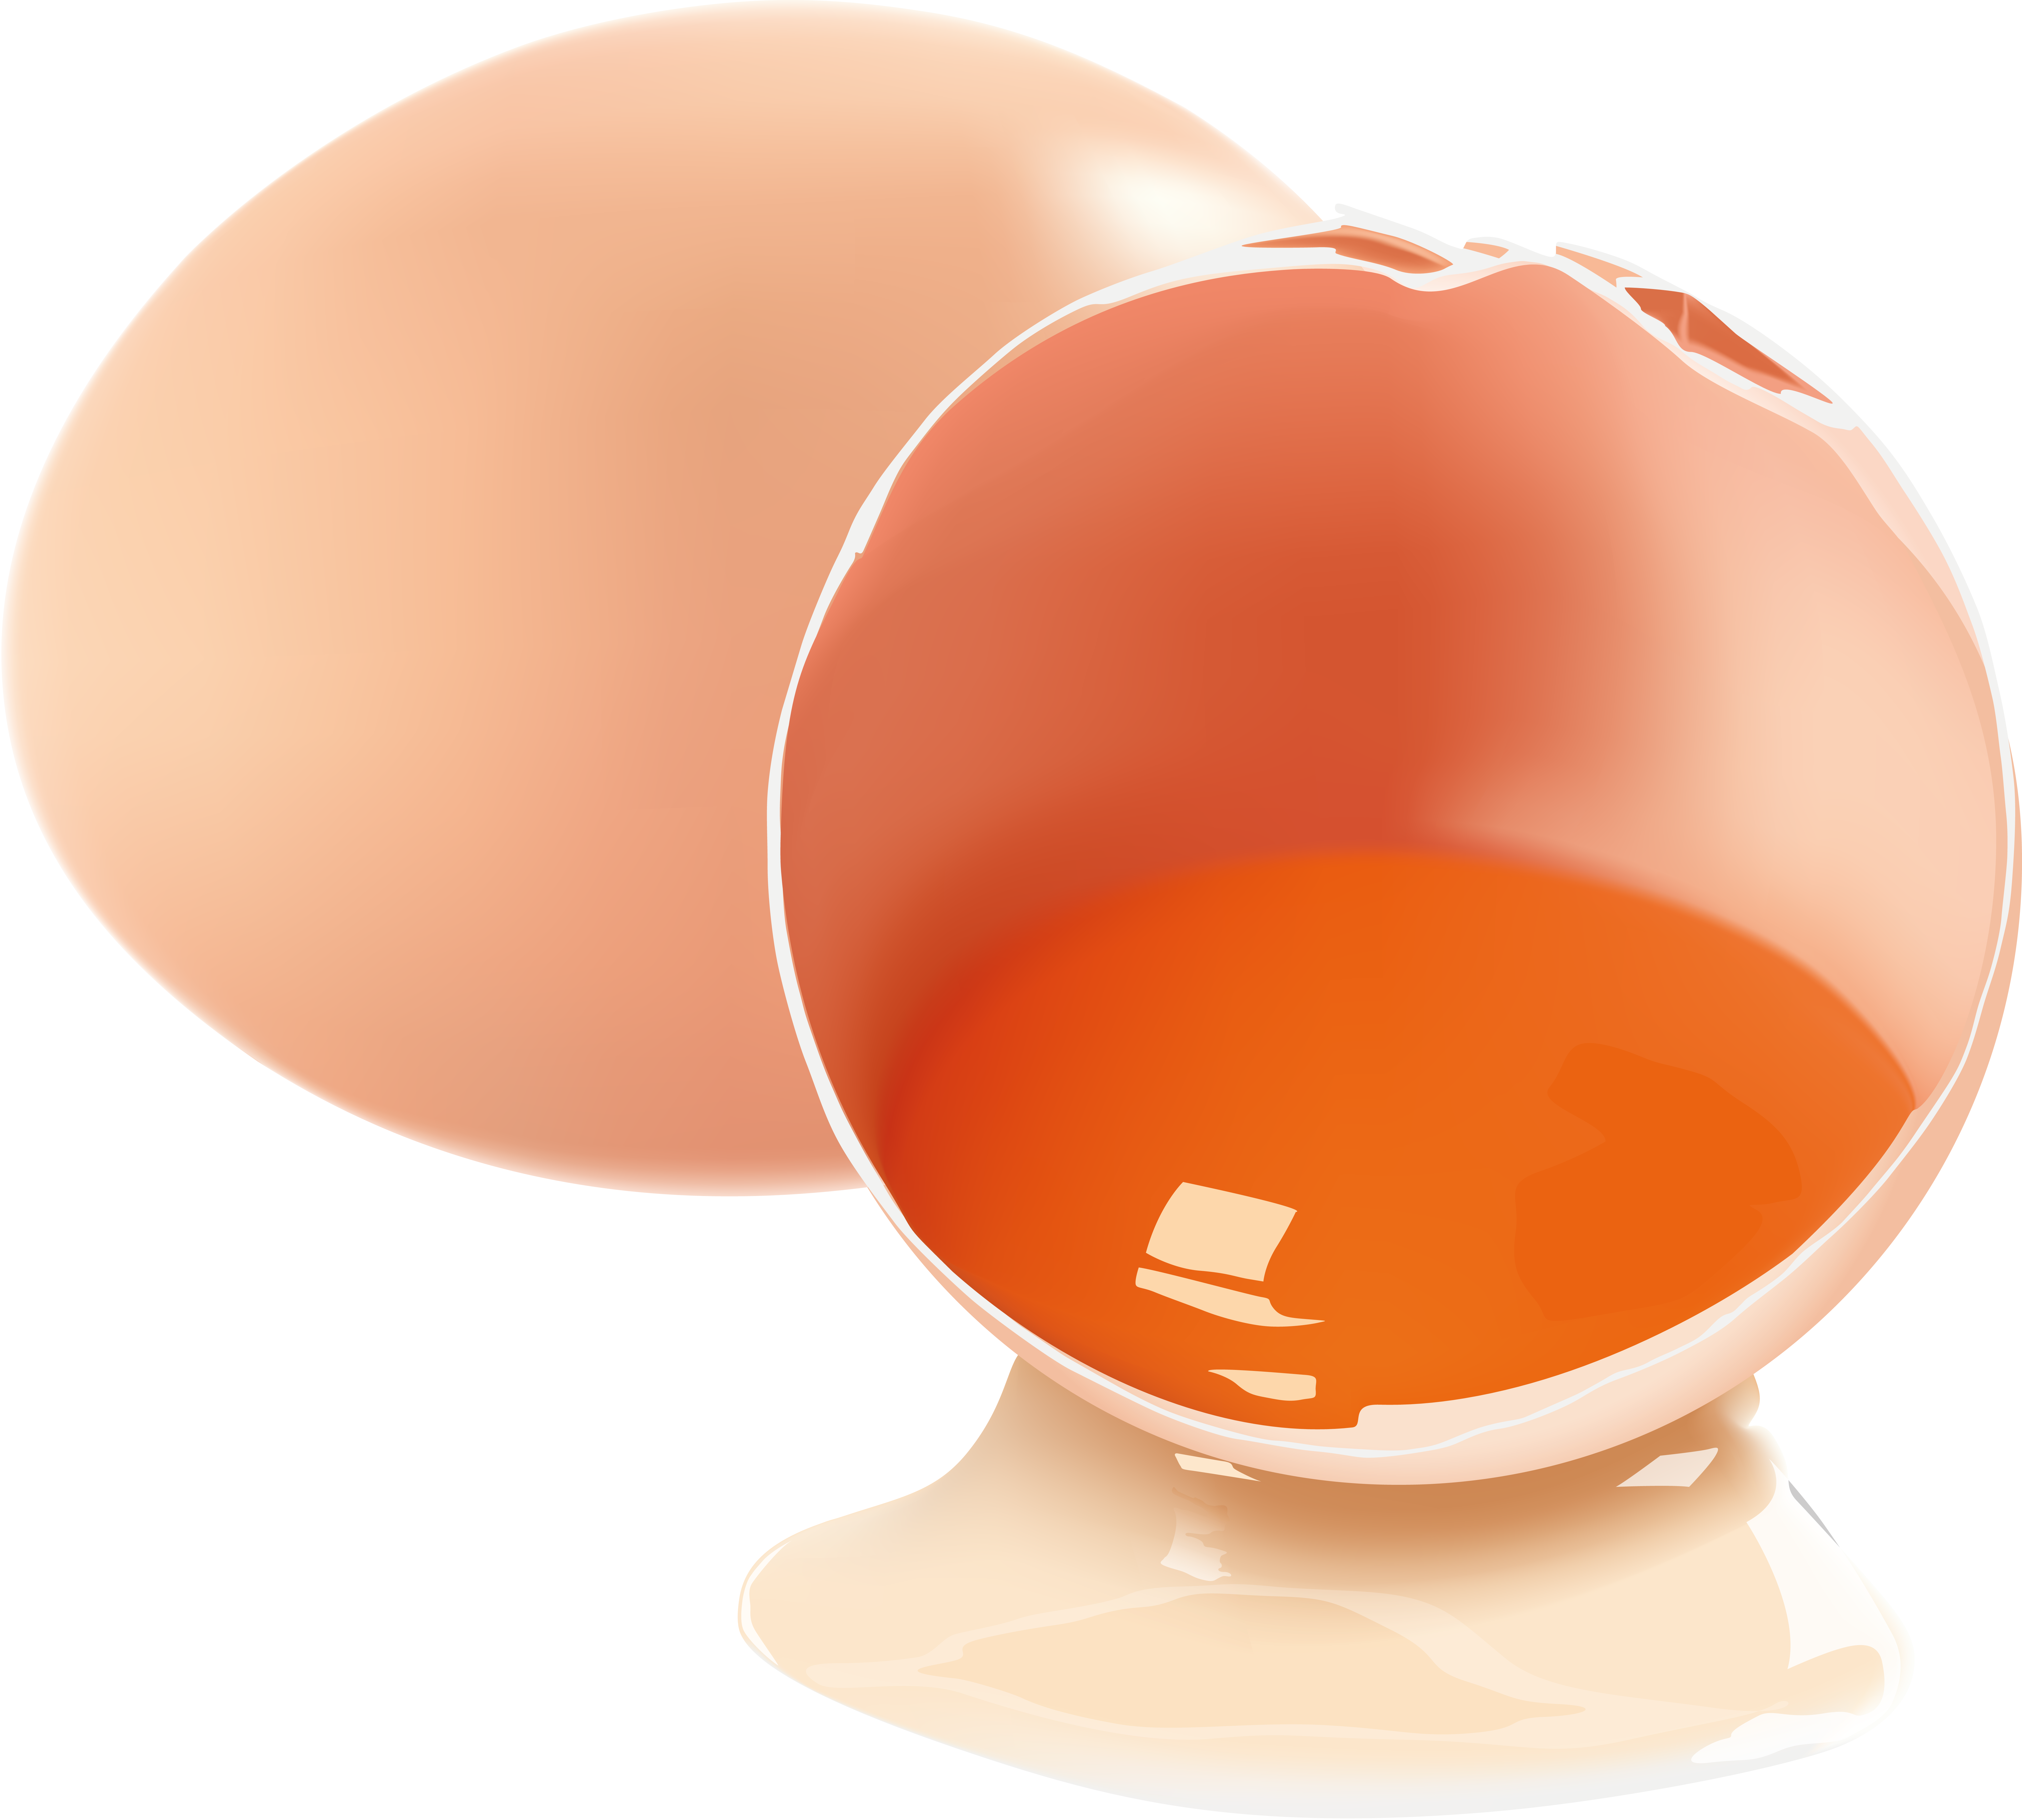 Uovo rotto